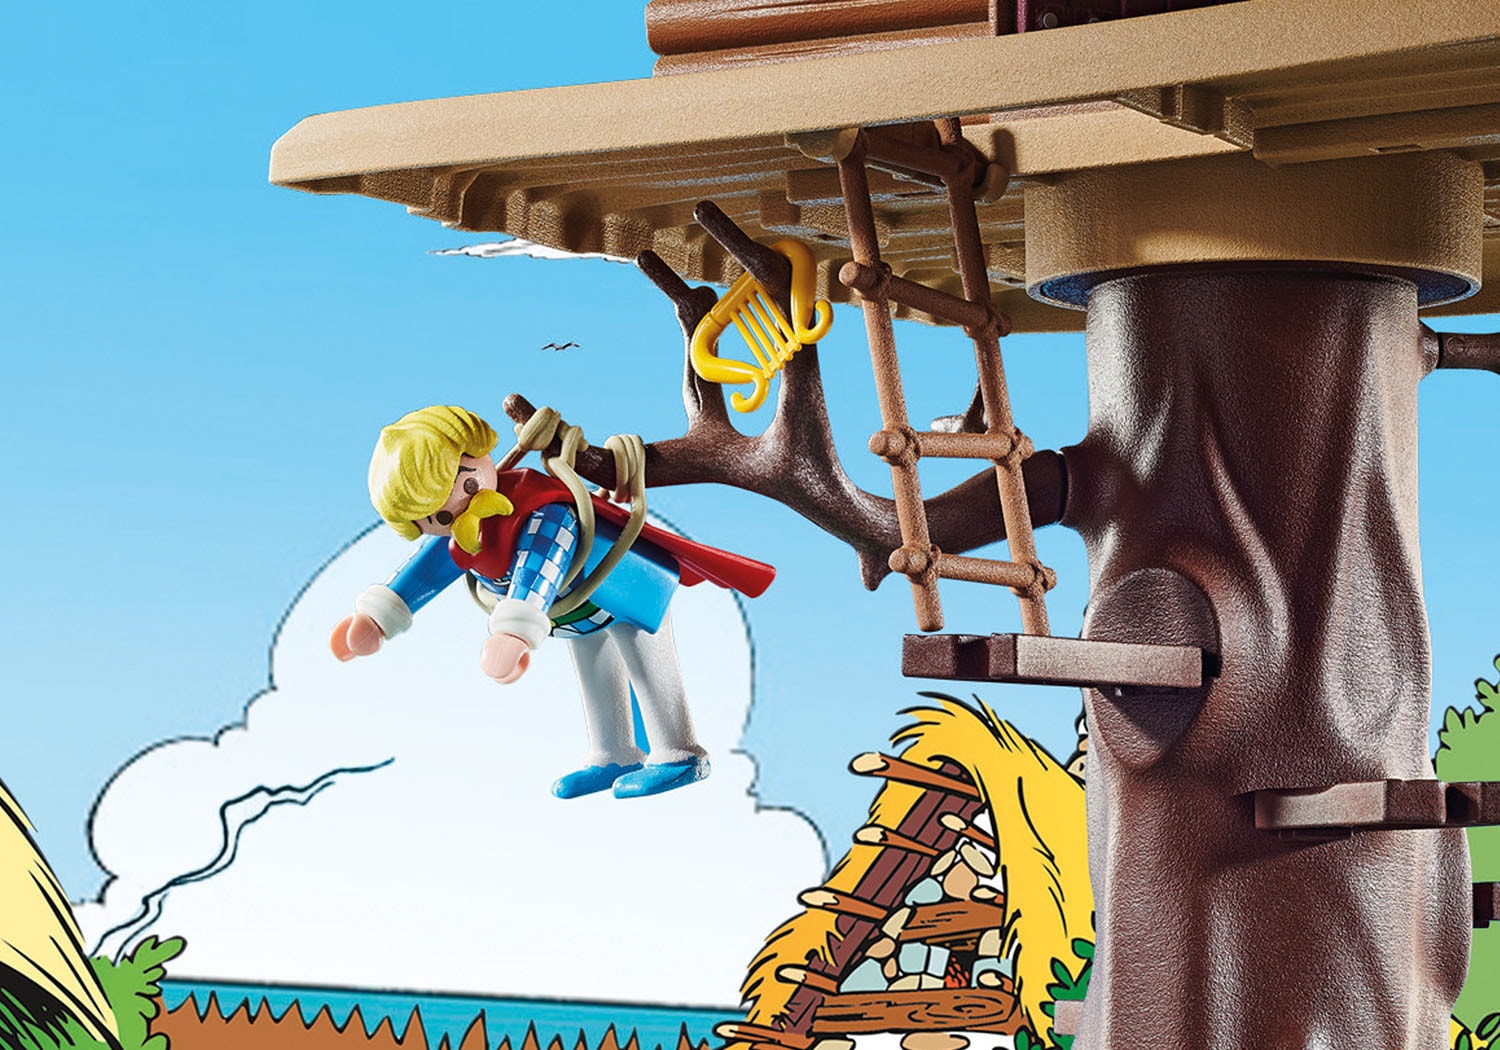 Playmobil® Konstruktions-Spielset »Troubadix mit Baumhaus (71016), Asterix«, (96 St.), Made in Germany